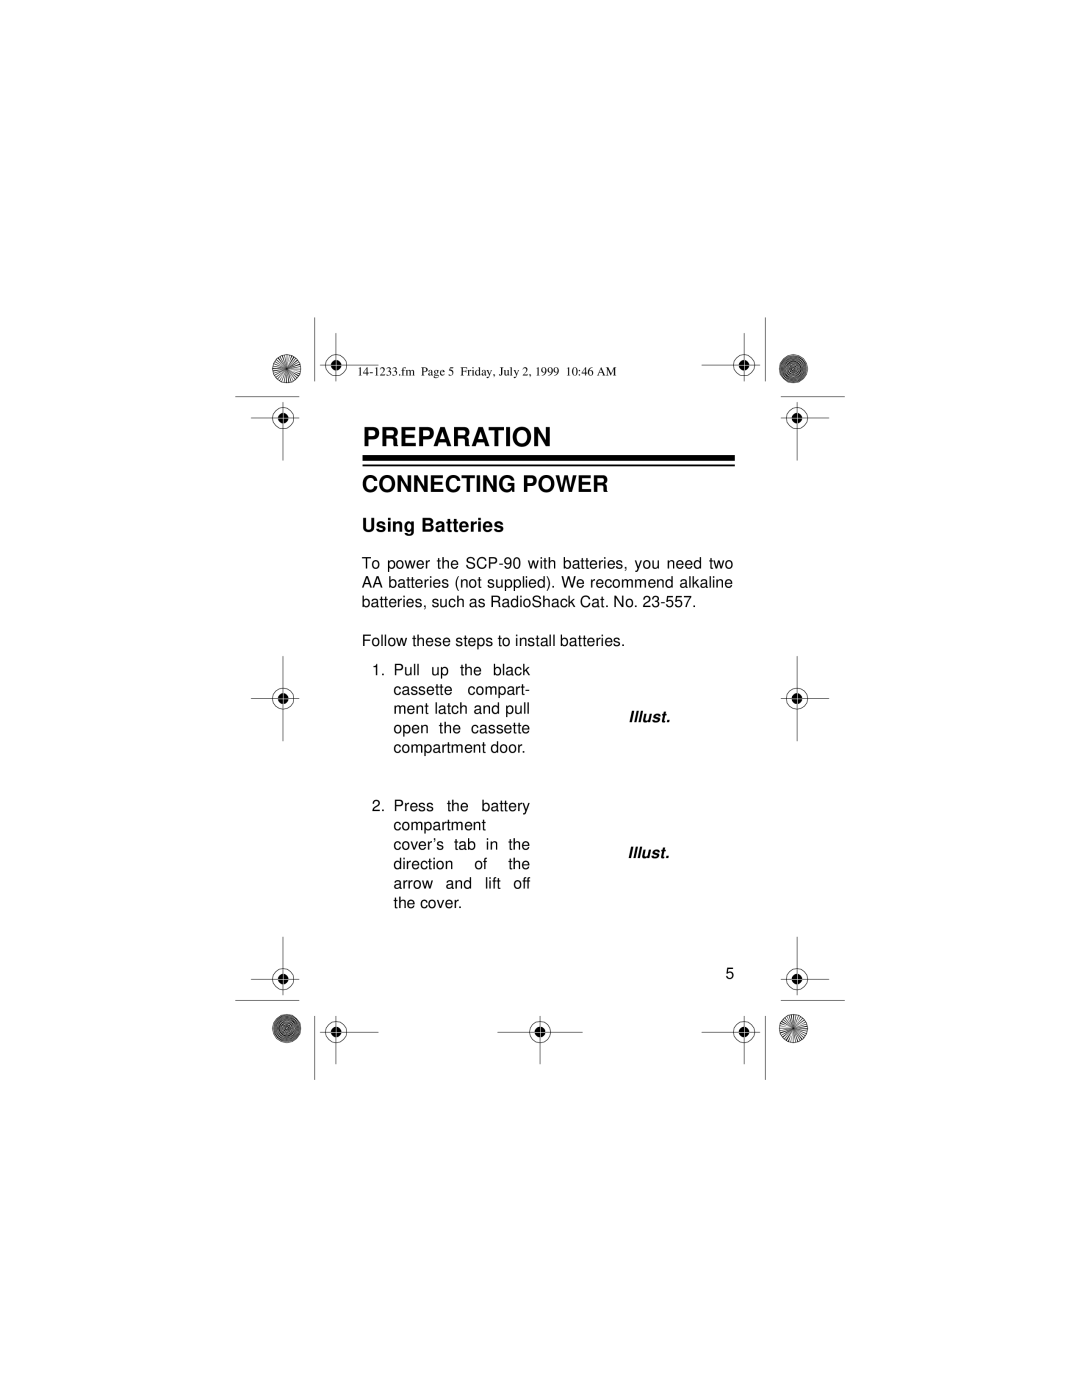 Optimus SCP-90 owner manual Preparation, Connecting Power, Using Batteries, Illust Illust 